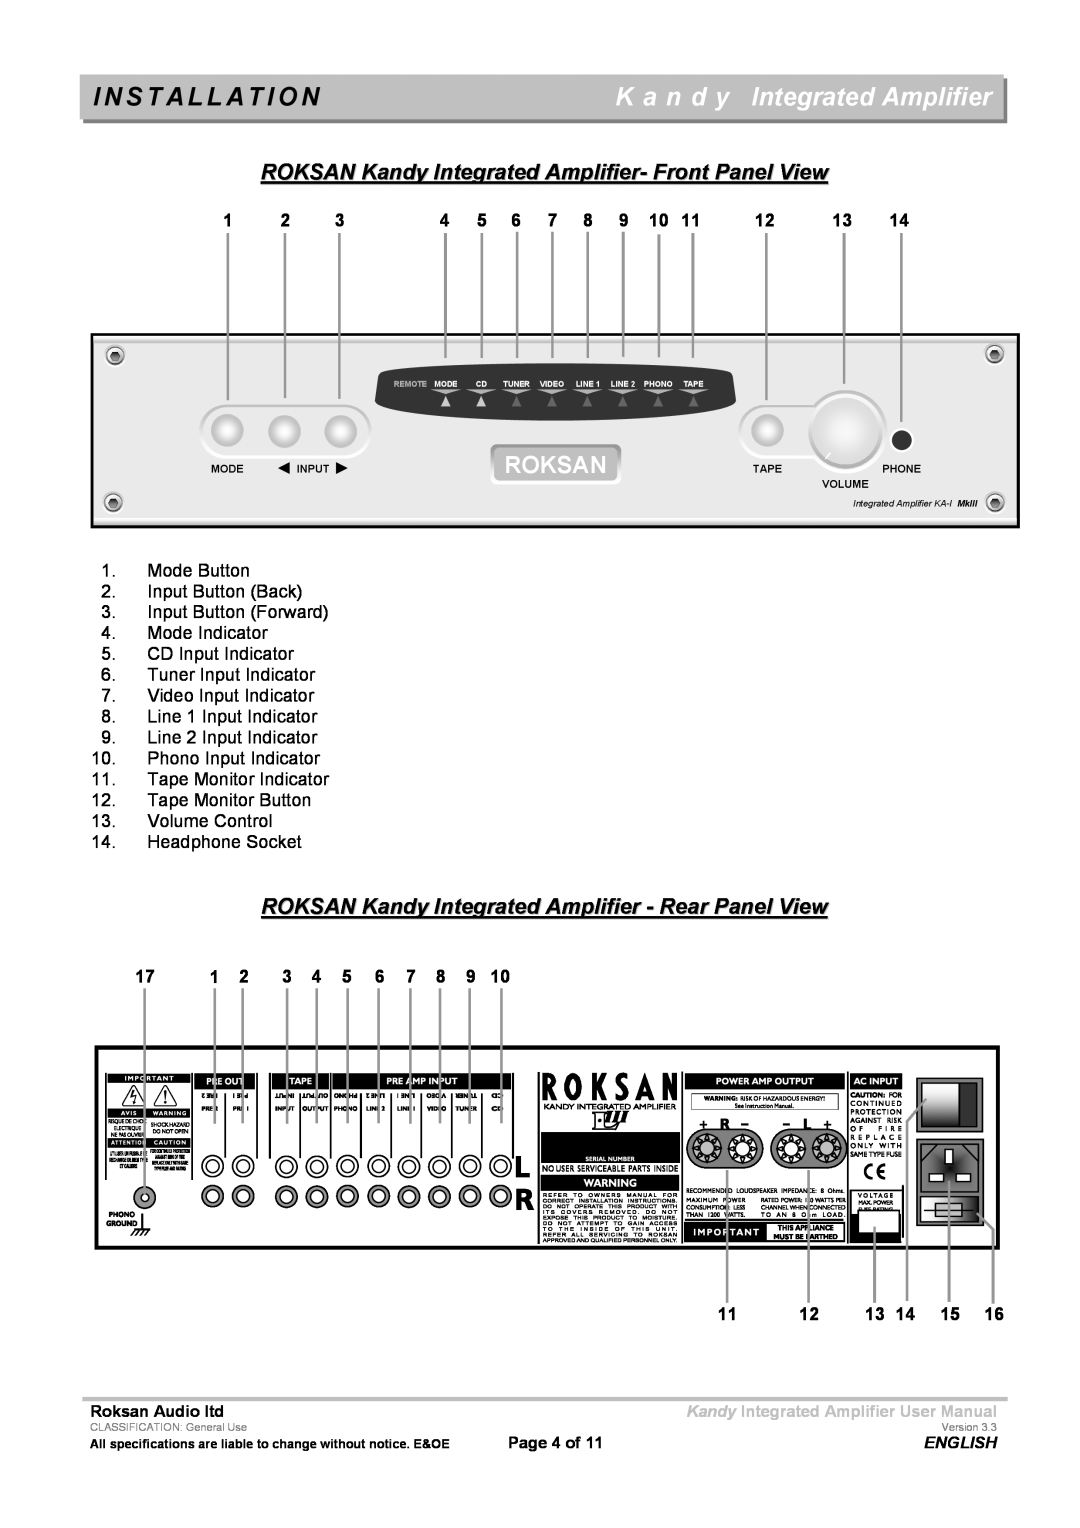 Roksan Audio LIII user manual K a n d y Integrated Amplifier, Roksan 